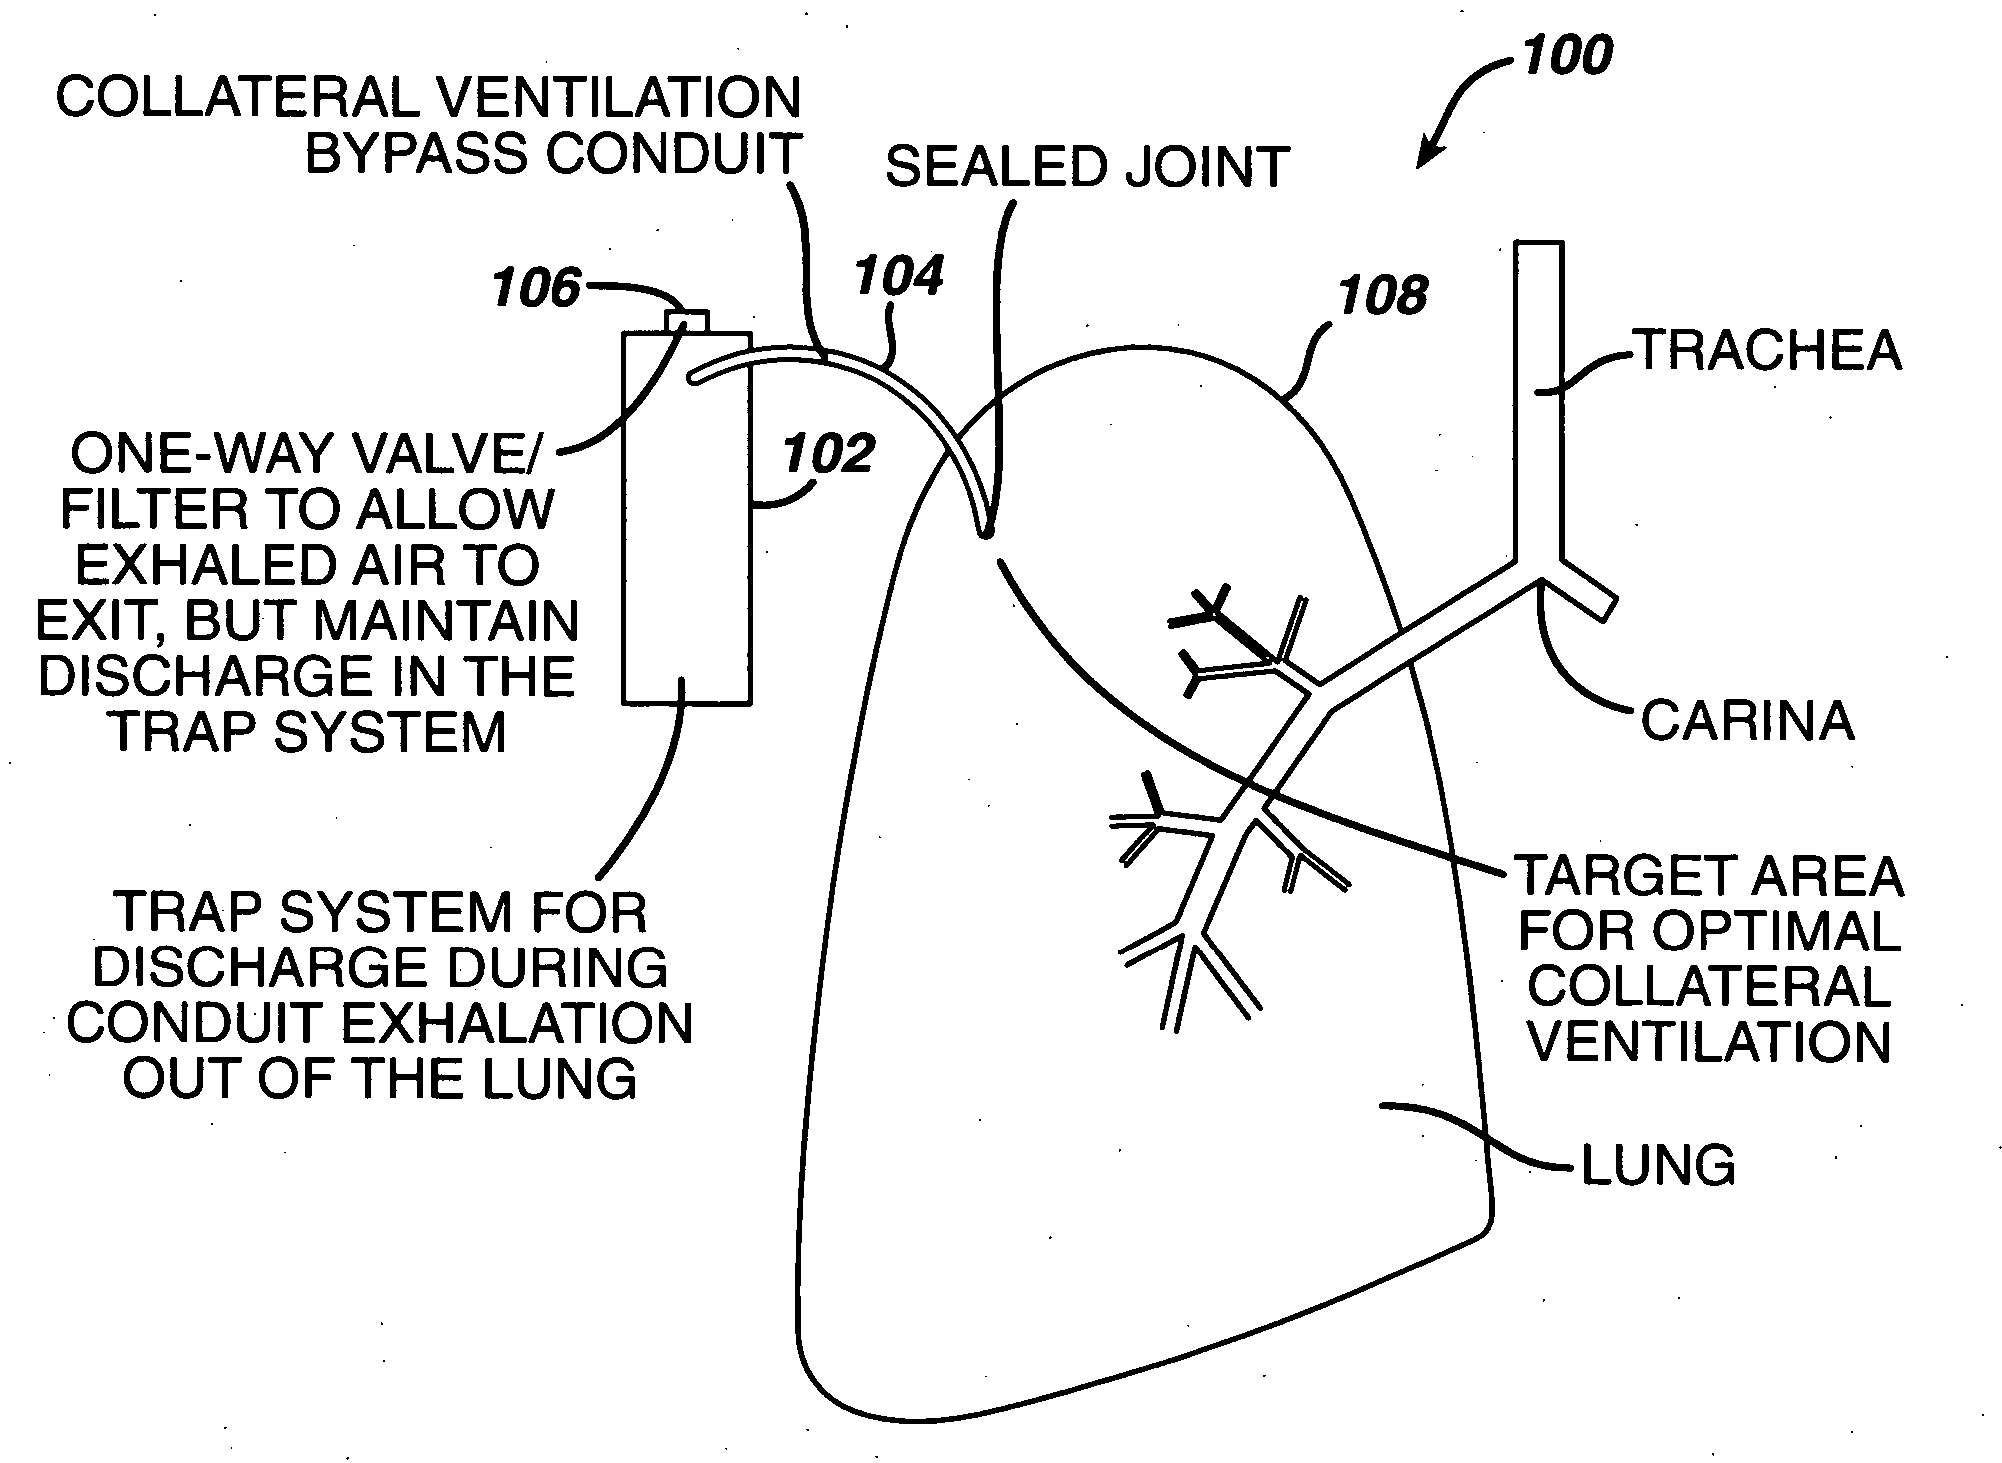 Variable resistance pulmonary ventilation bypass valve